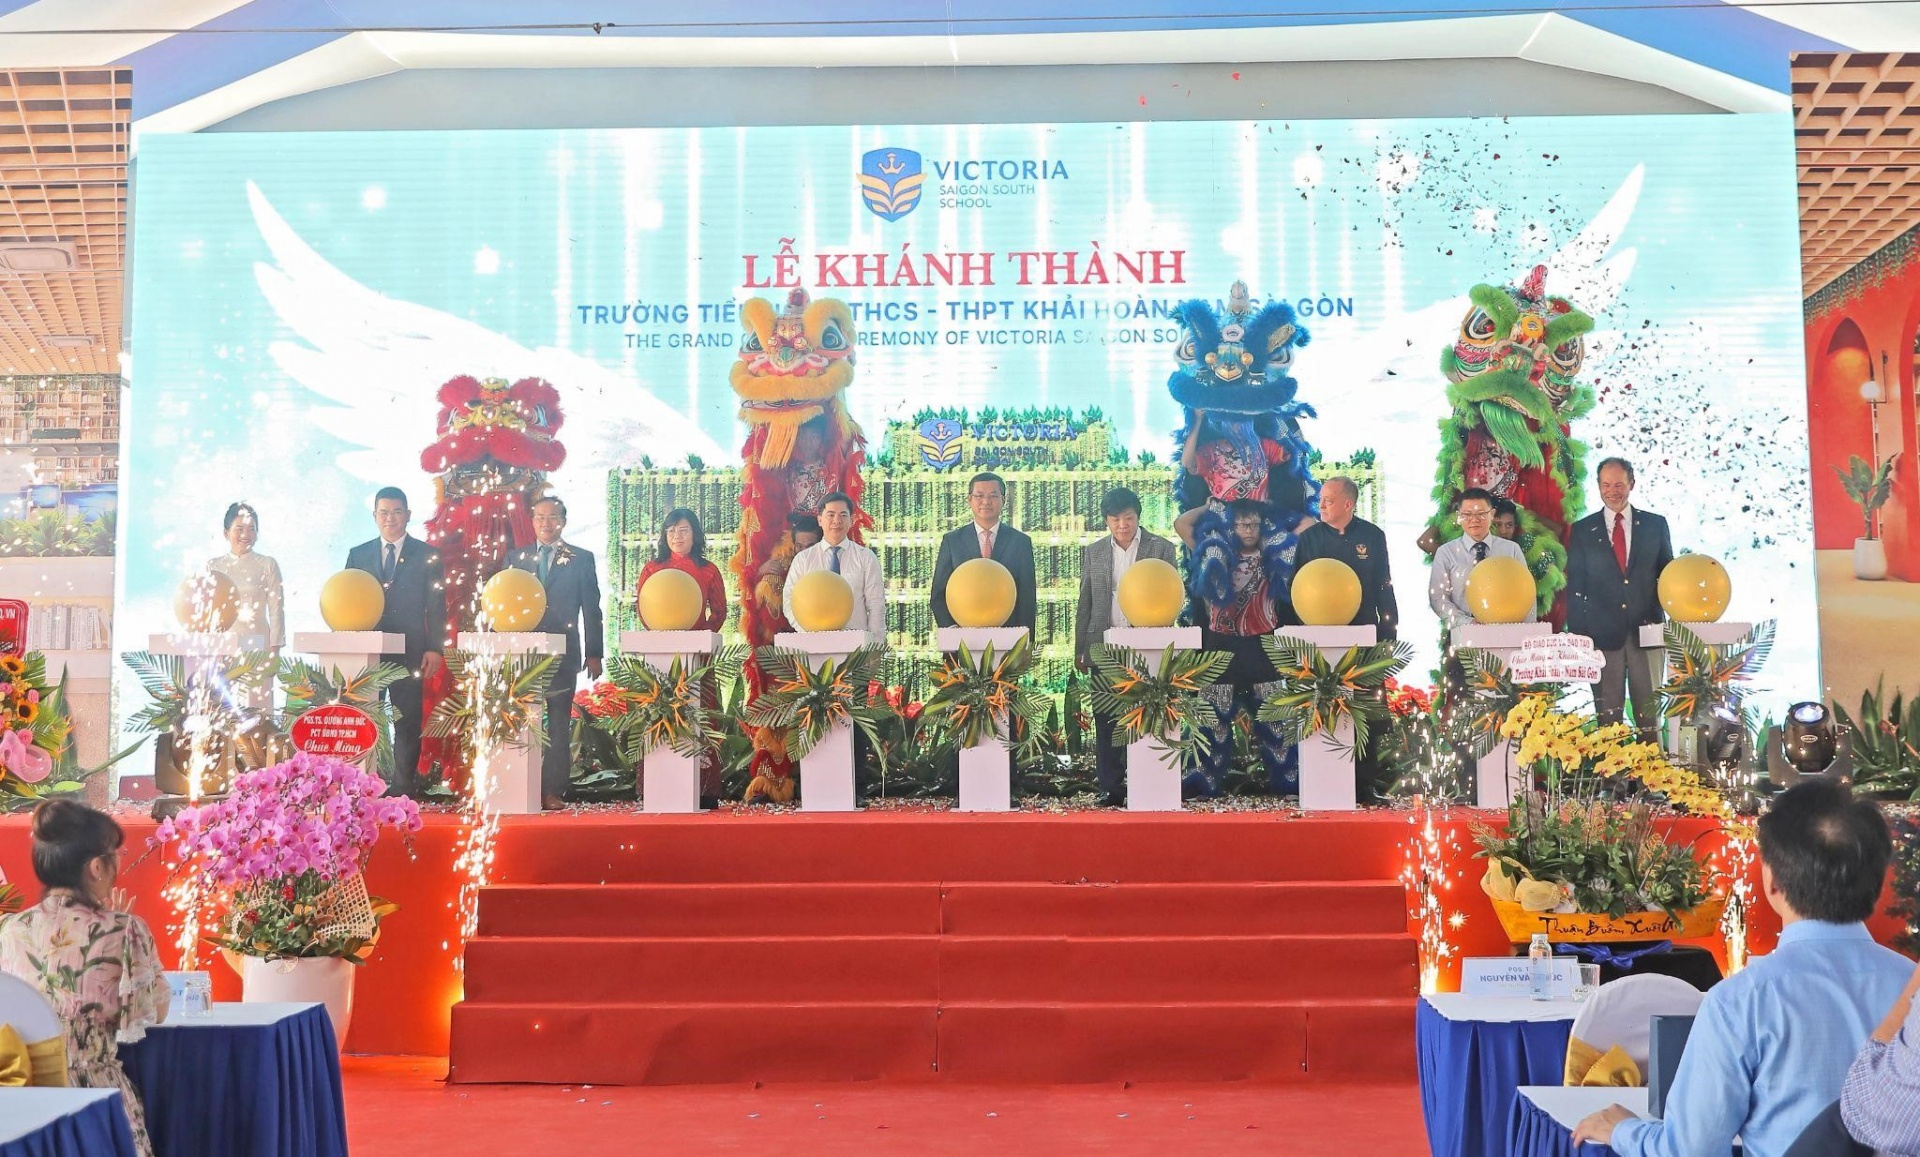 Victoria School inaugurated in Ho Chi Minh City